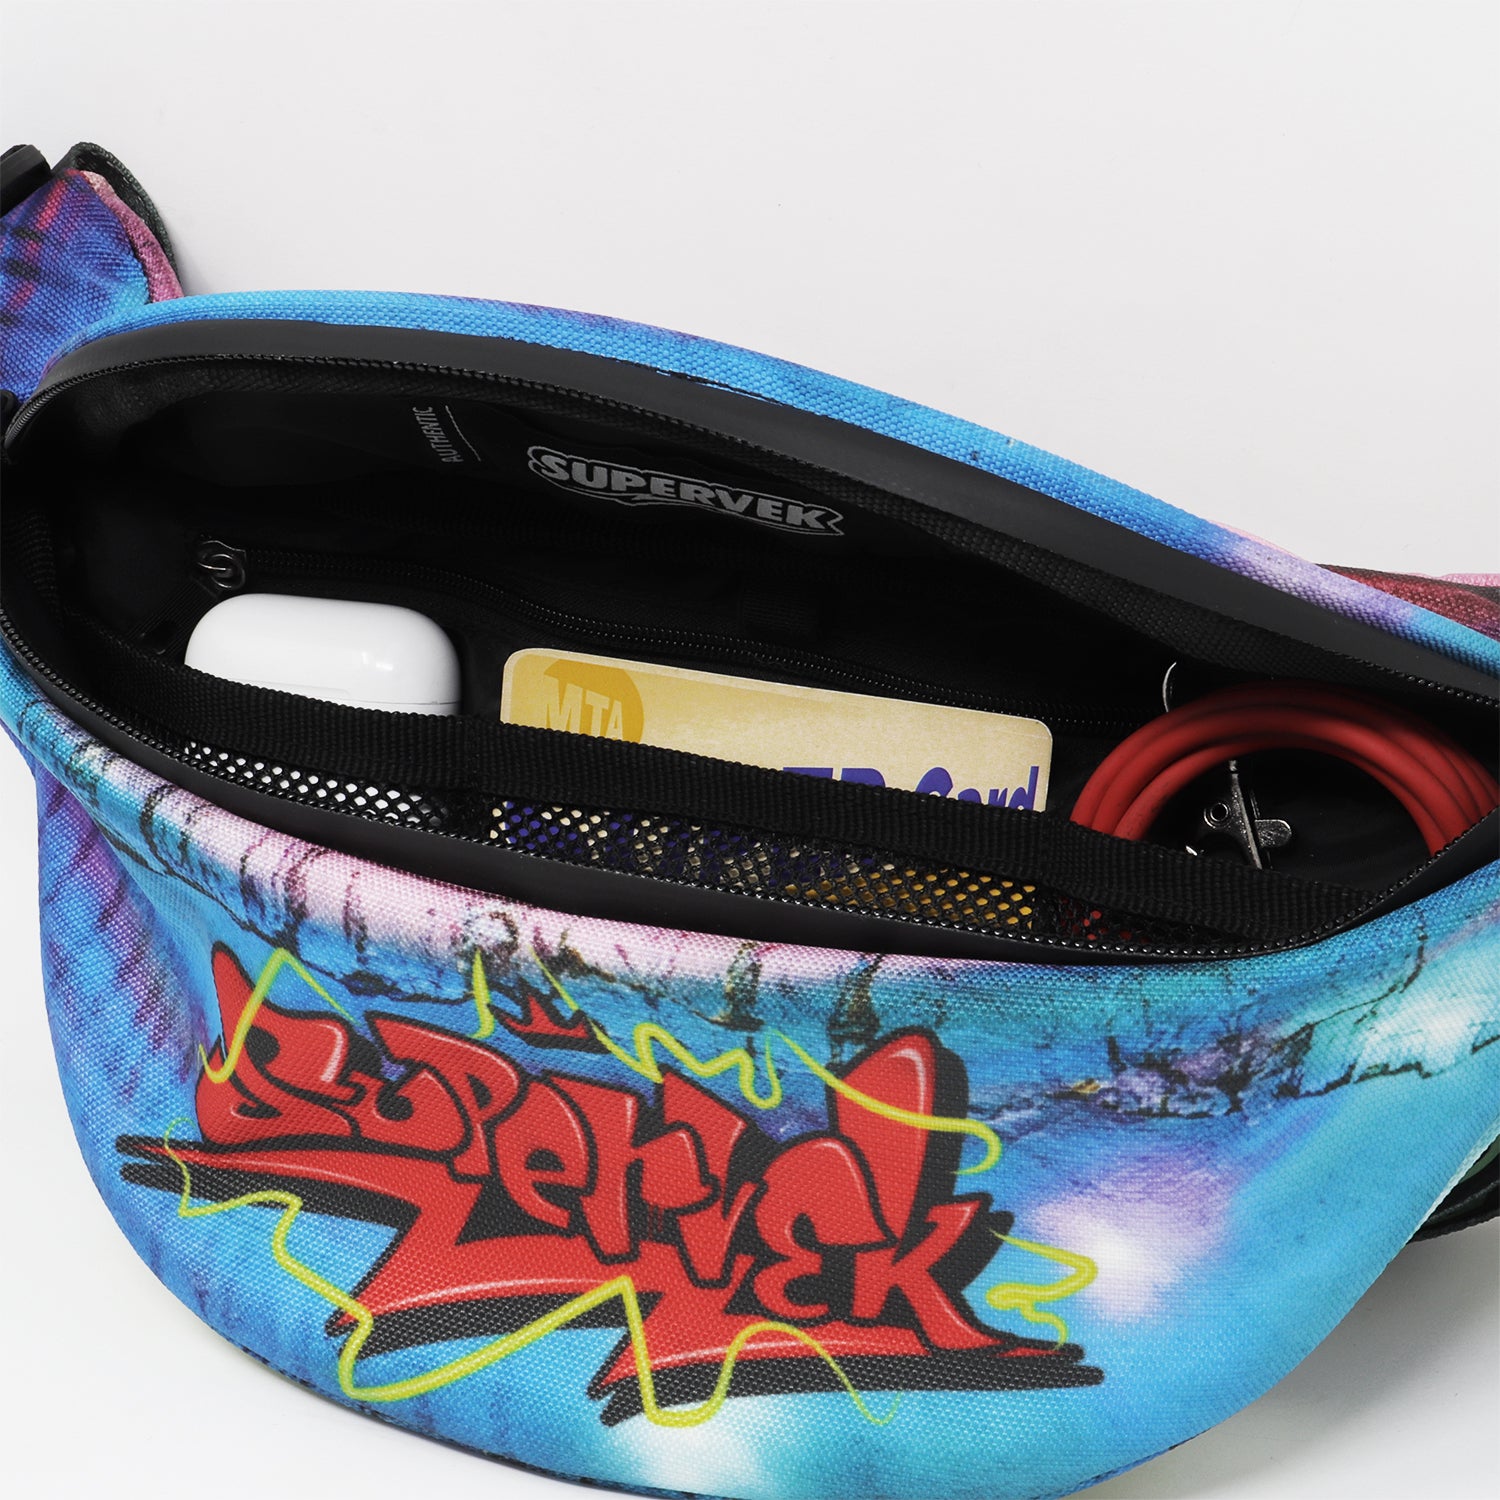 Supervek Crossbody Slinger - Graffiti - Urban Functional Fanny Hip Bag for Everyday Essentials - Inside